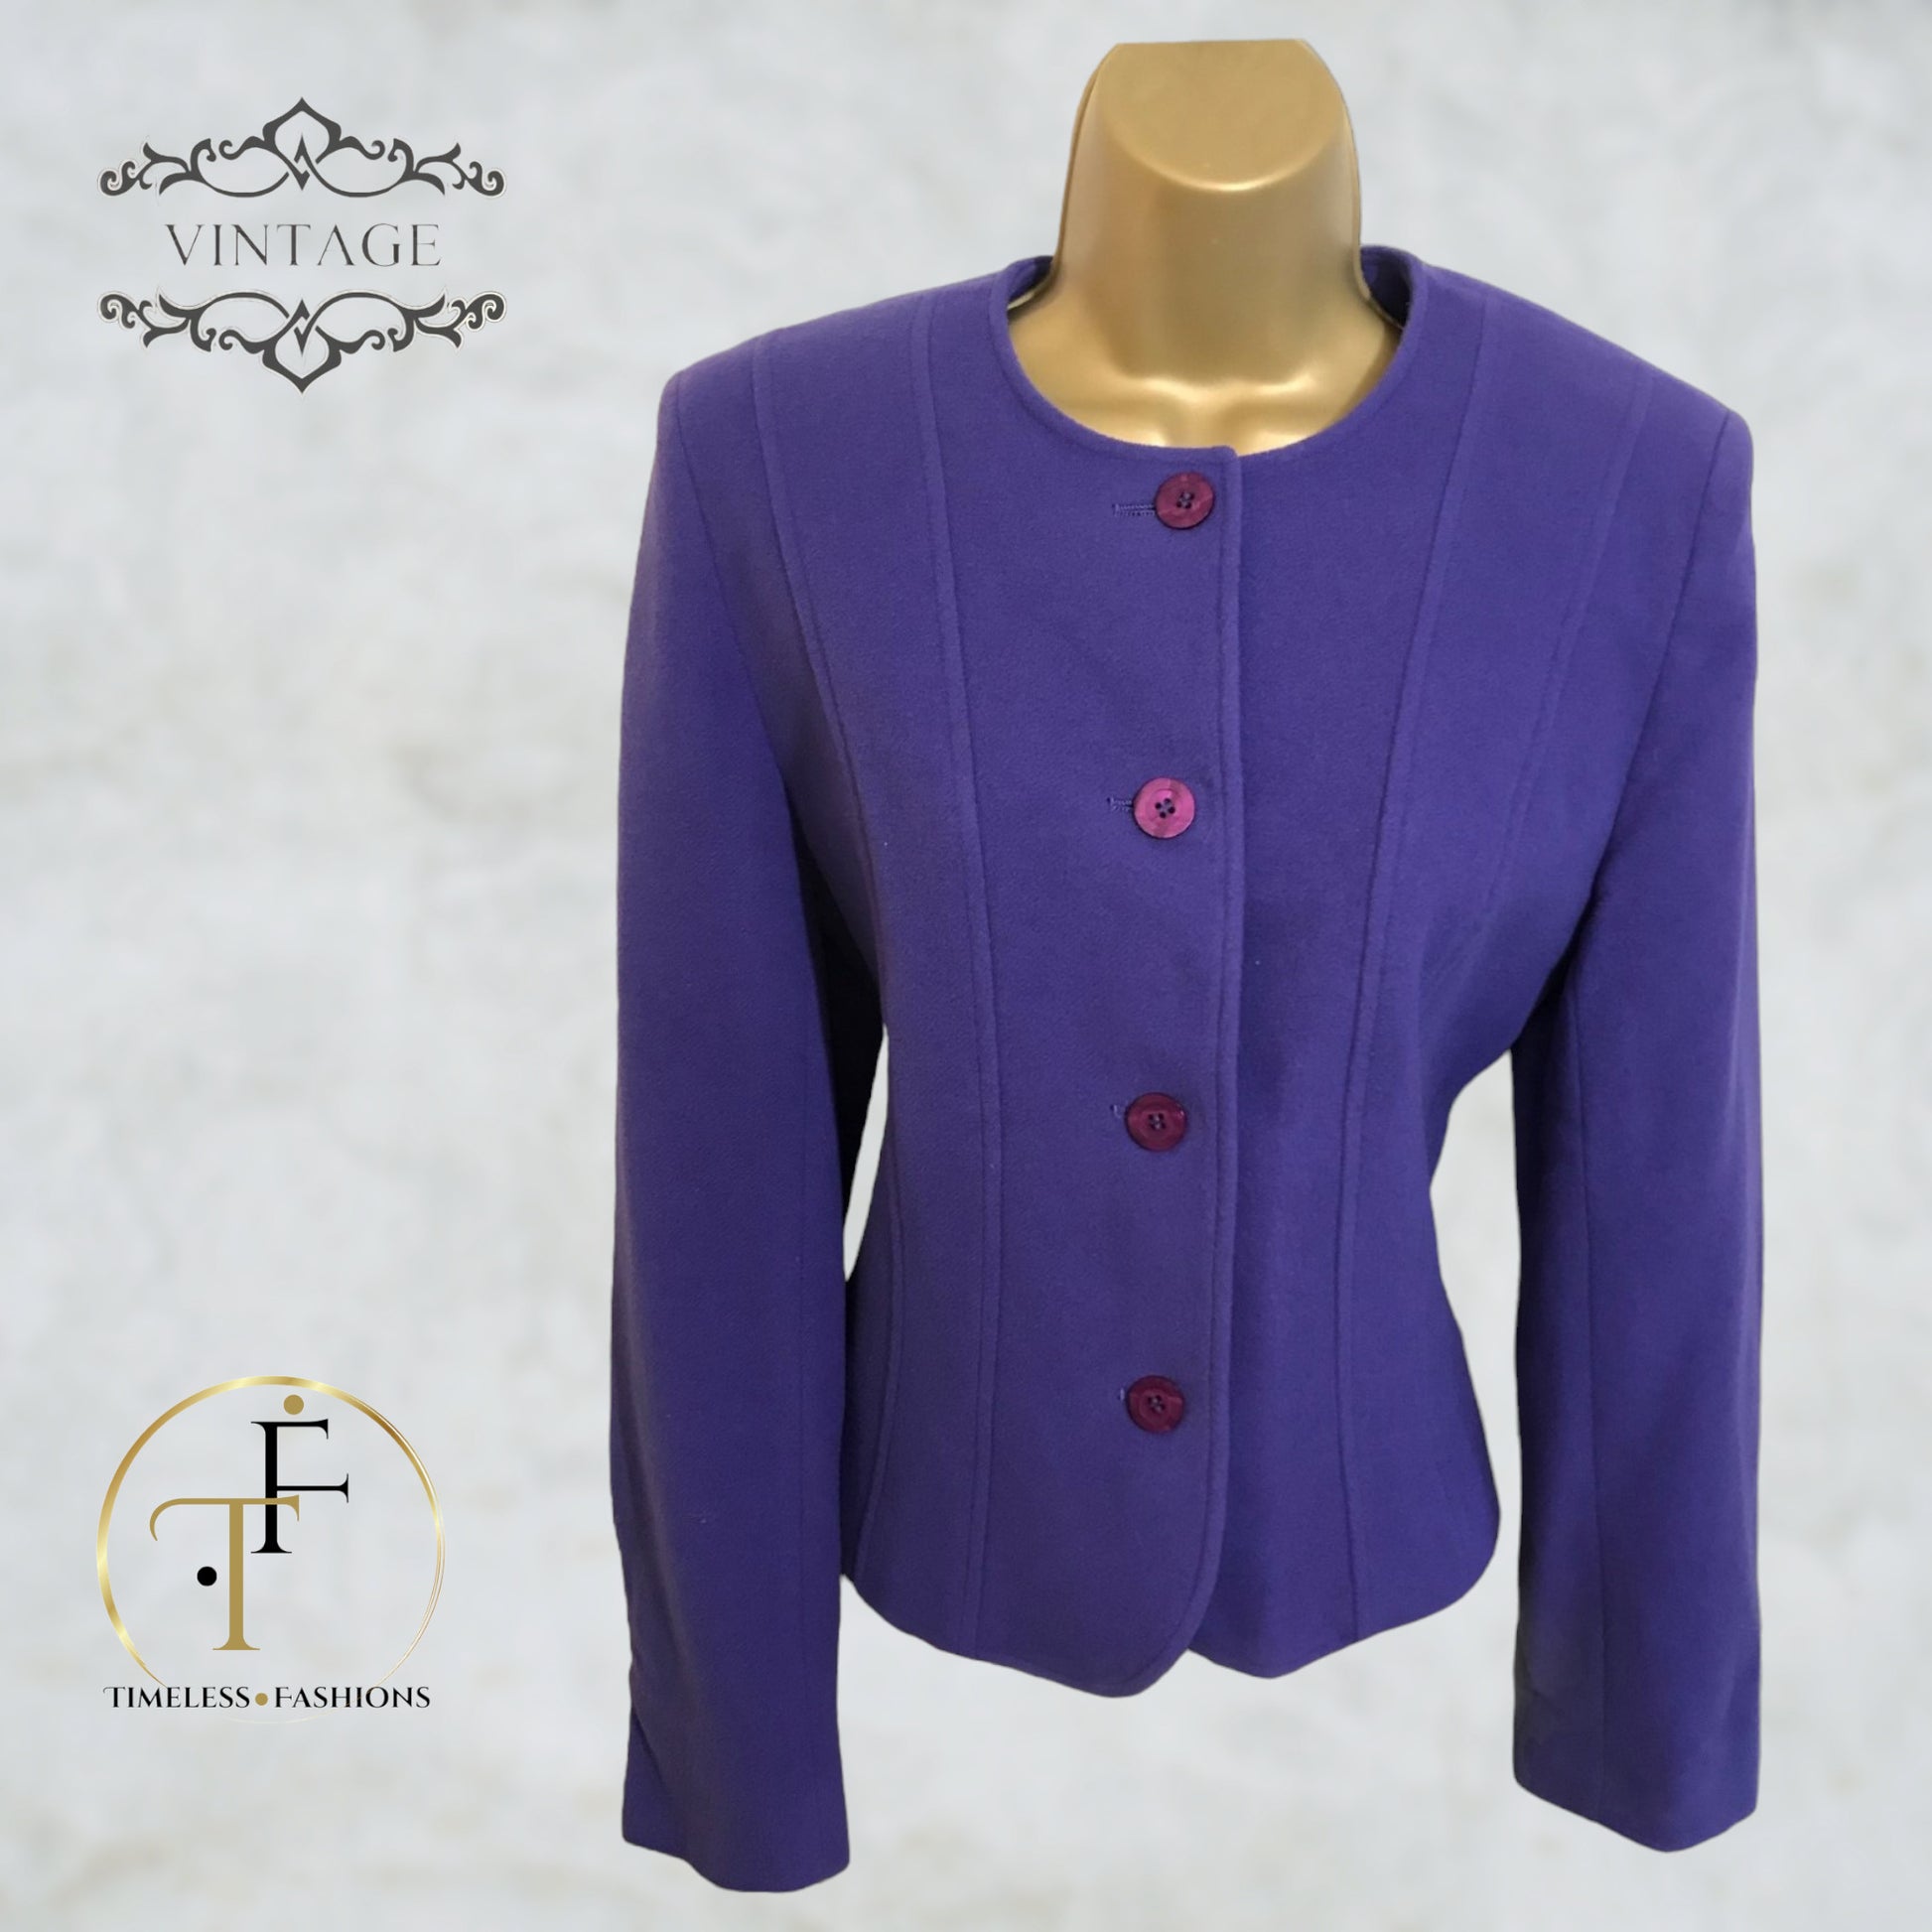 Alexon Vintage Purple Wool & Cashmere Jacket UK 10 US 6 EU 38 Timeless Fashions